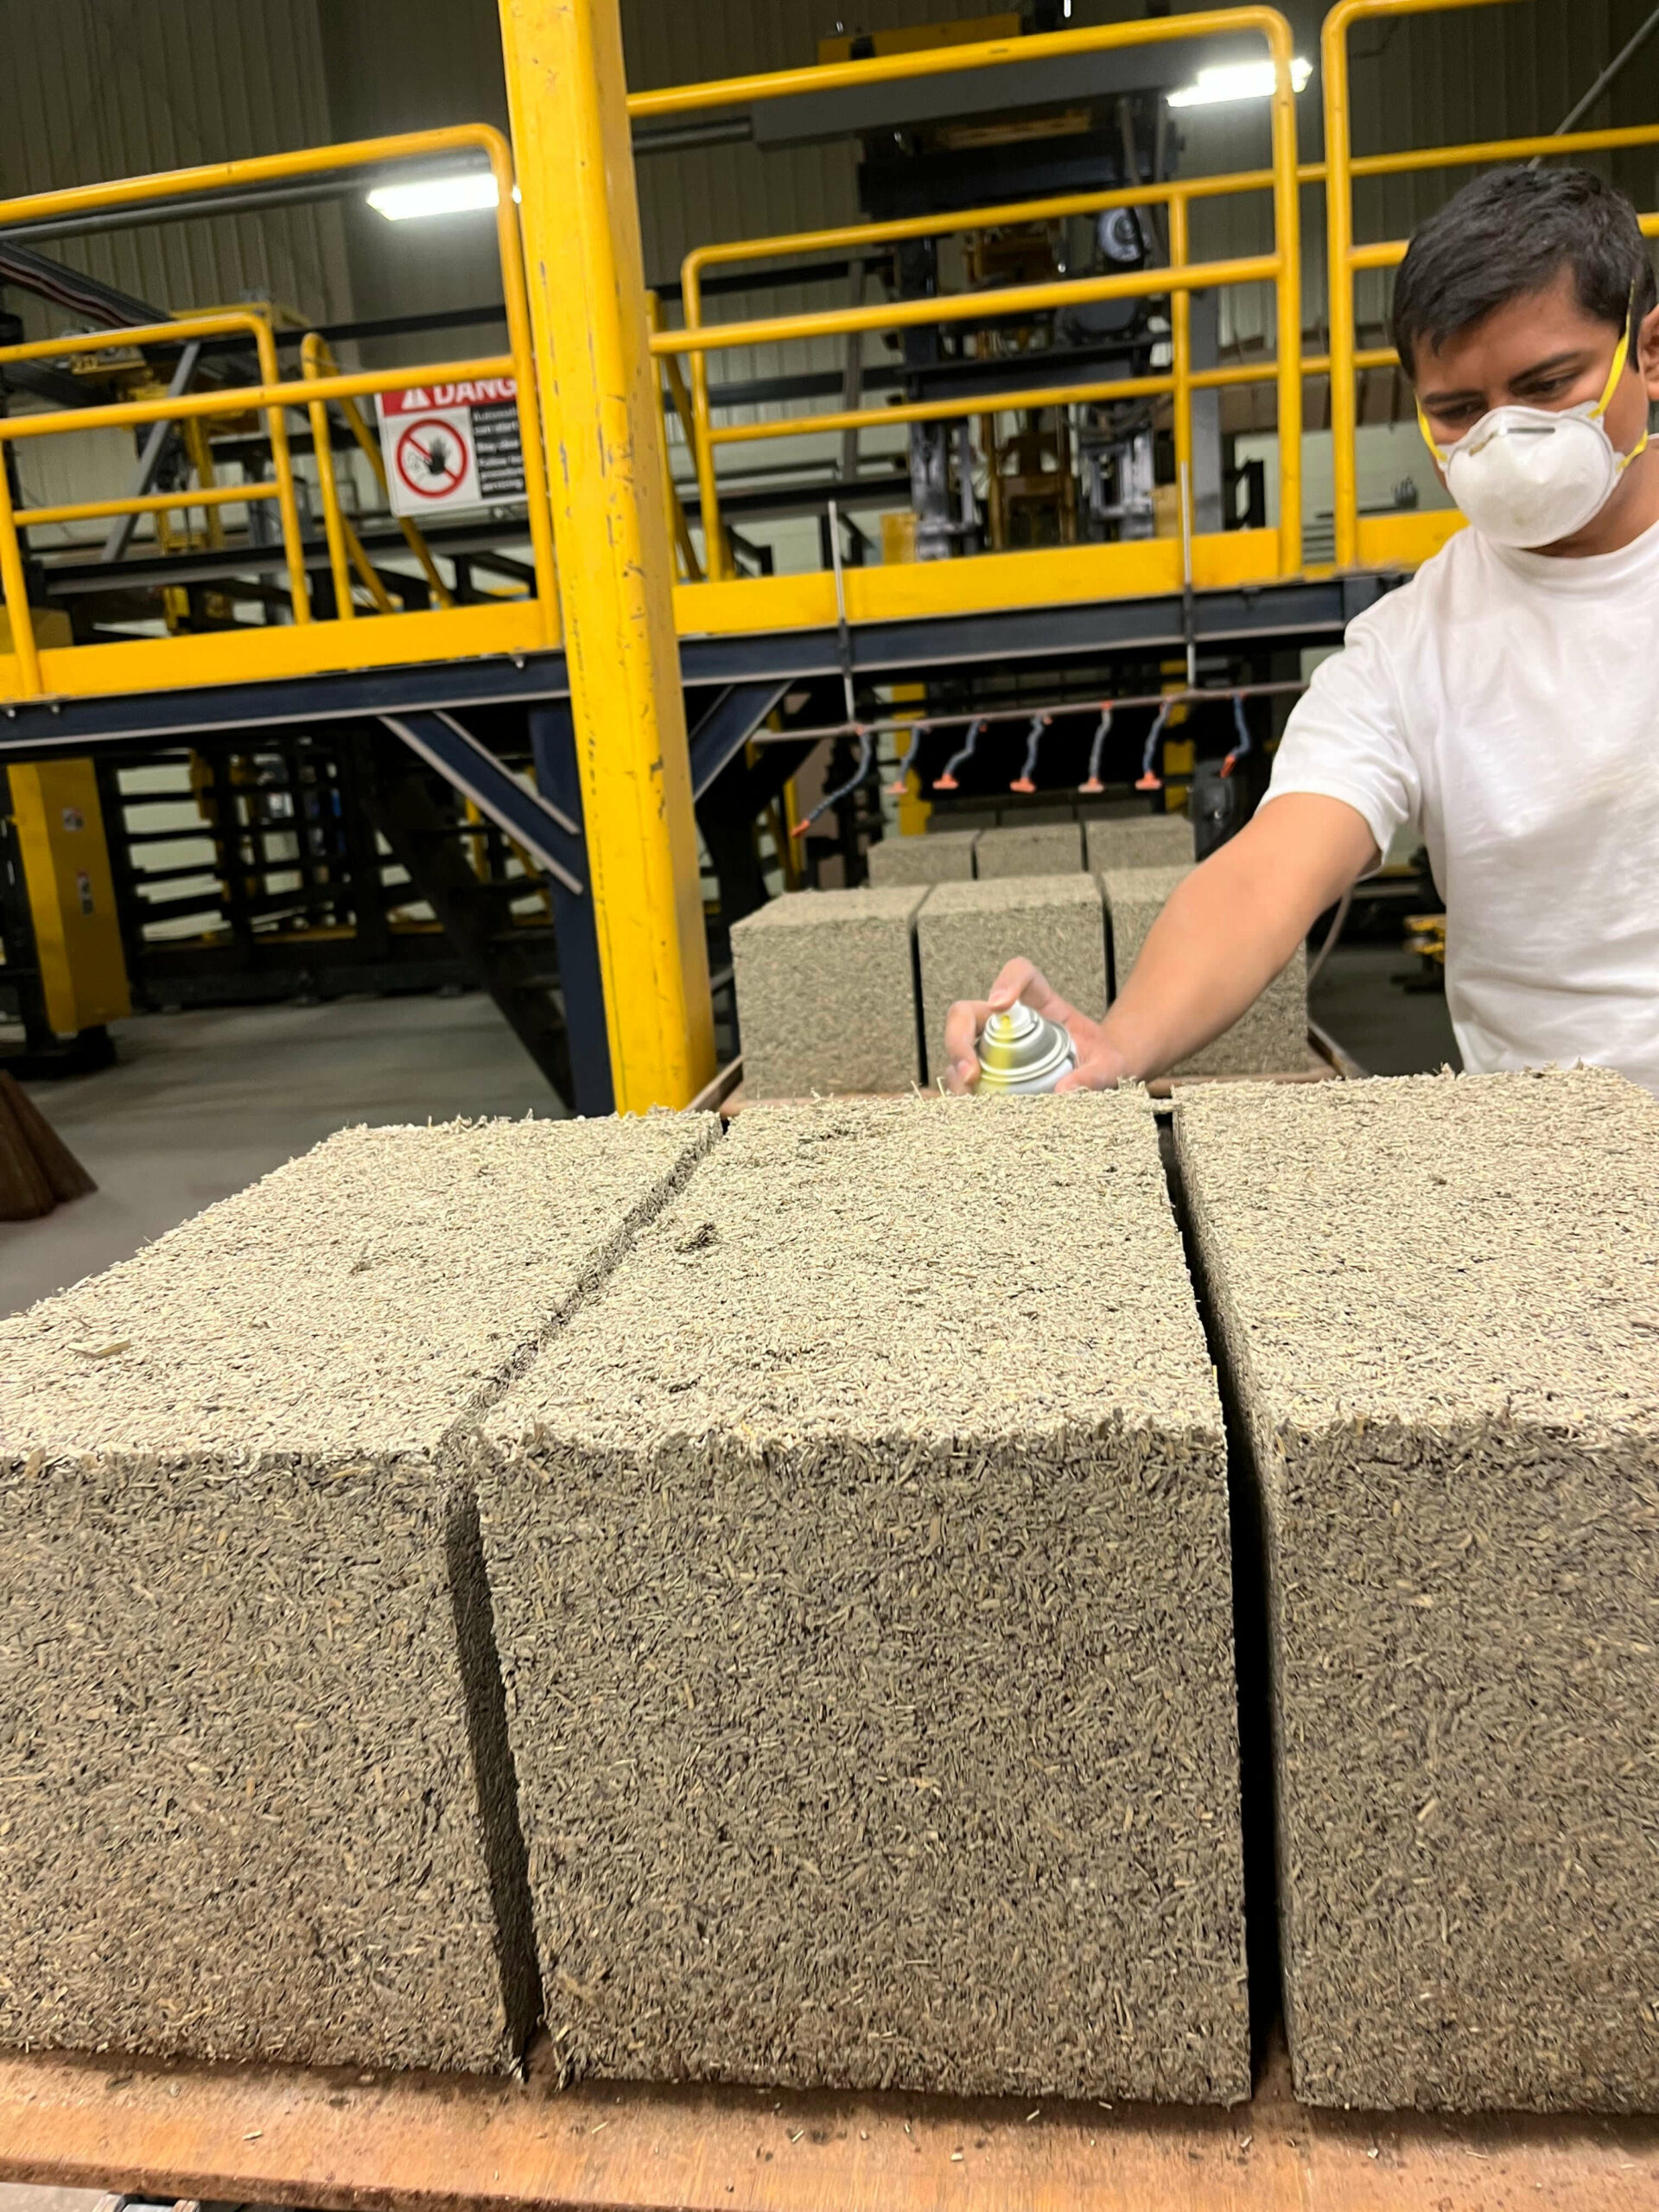 Pressed Hempcrete Bricks - Buy Hempcrete Blocks - Green Insultation and Carbon-Negative Construction Materials